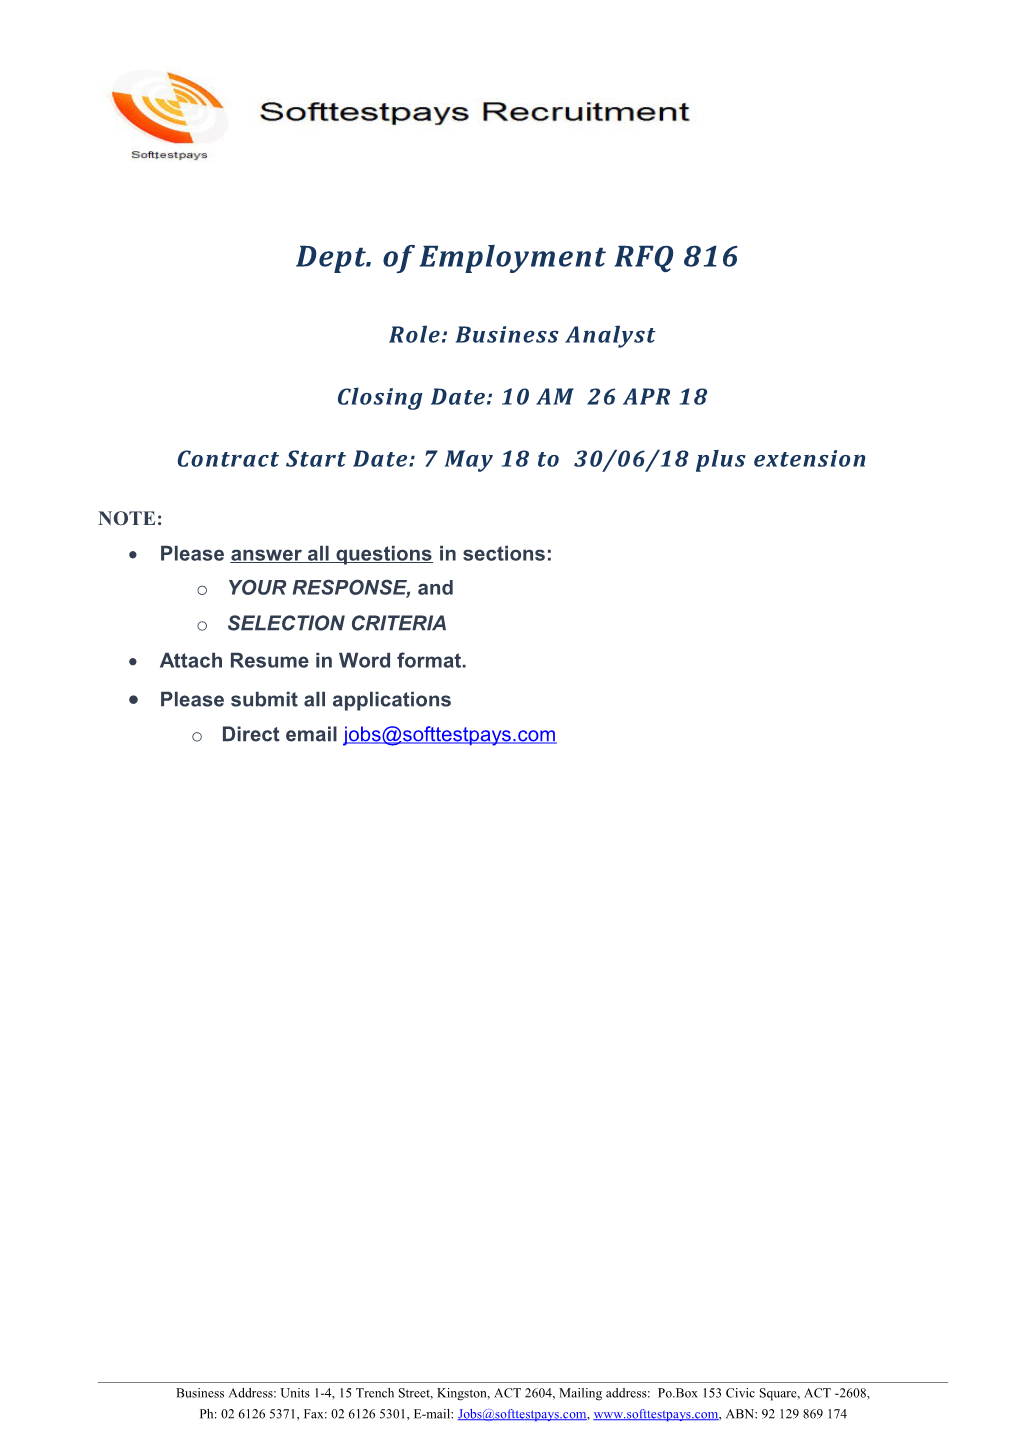 Dept. of Employment RFQ816